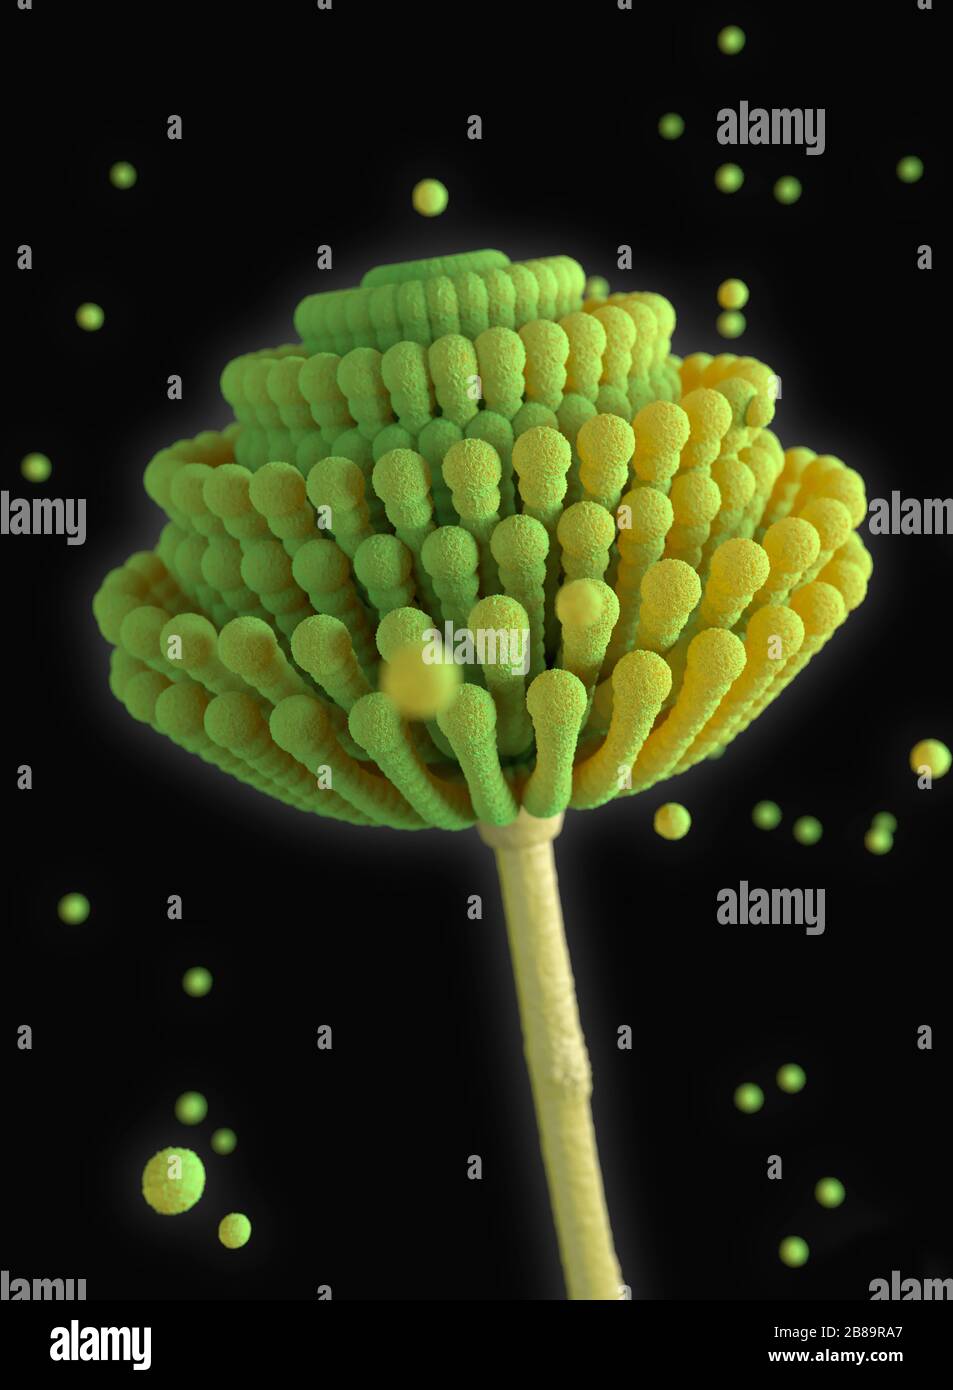 Aspergillus mould and spores, illustration Stock Photo